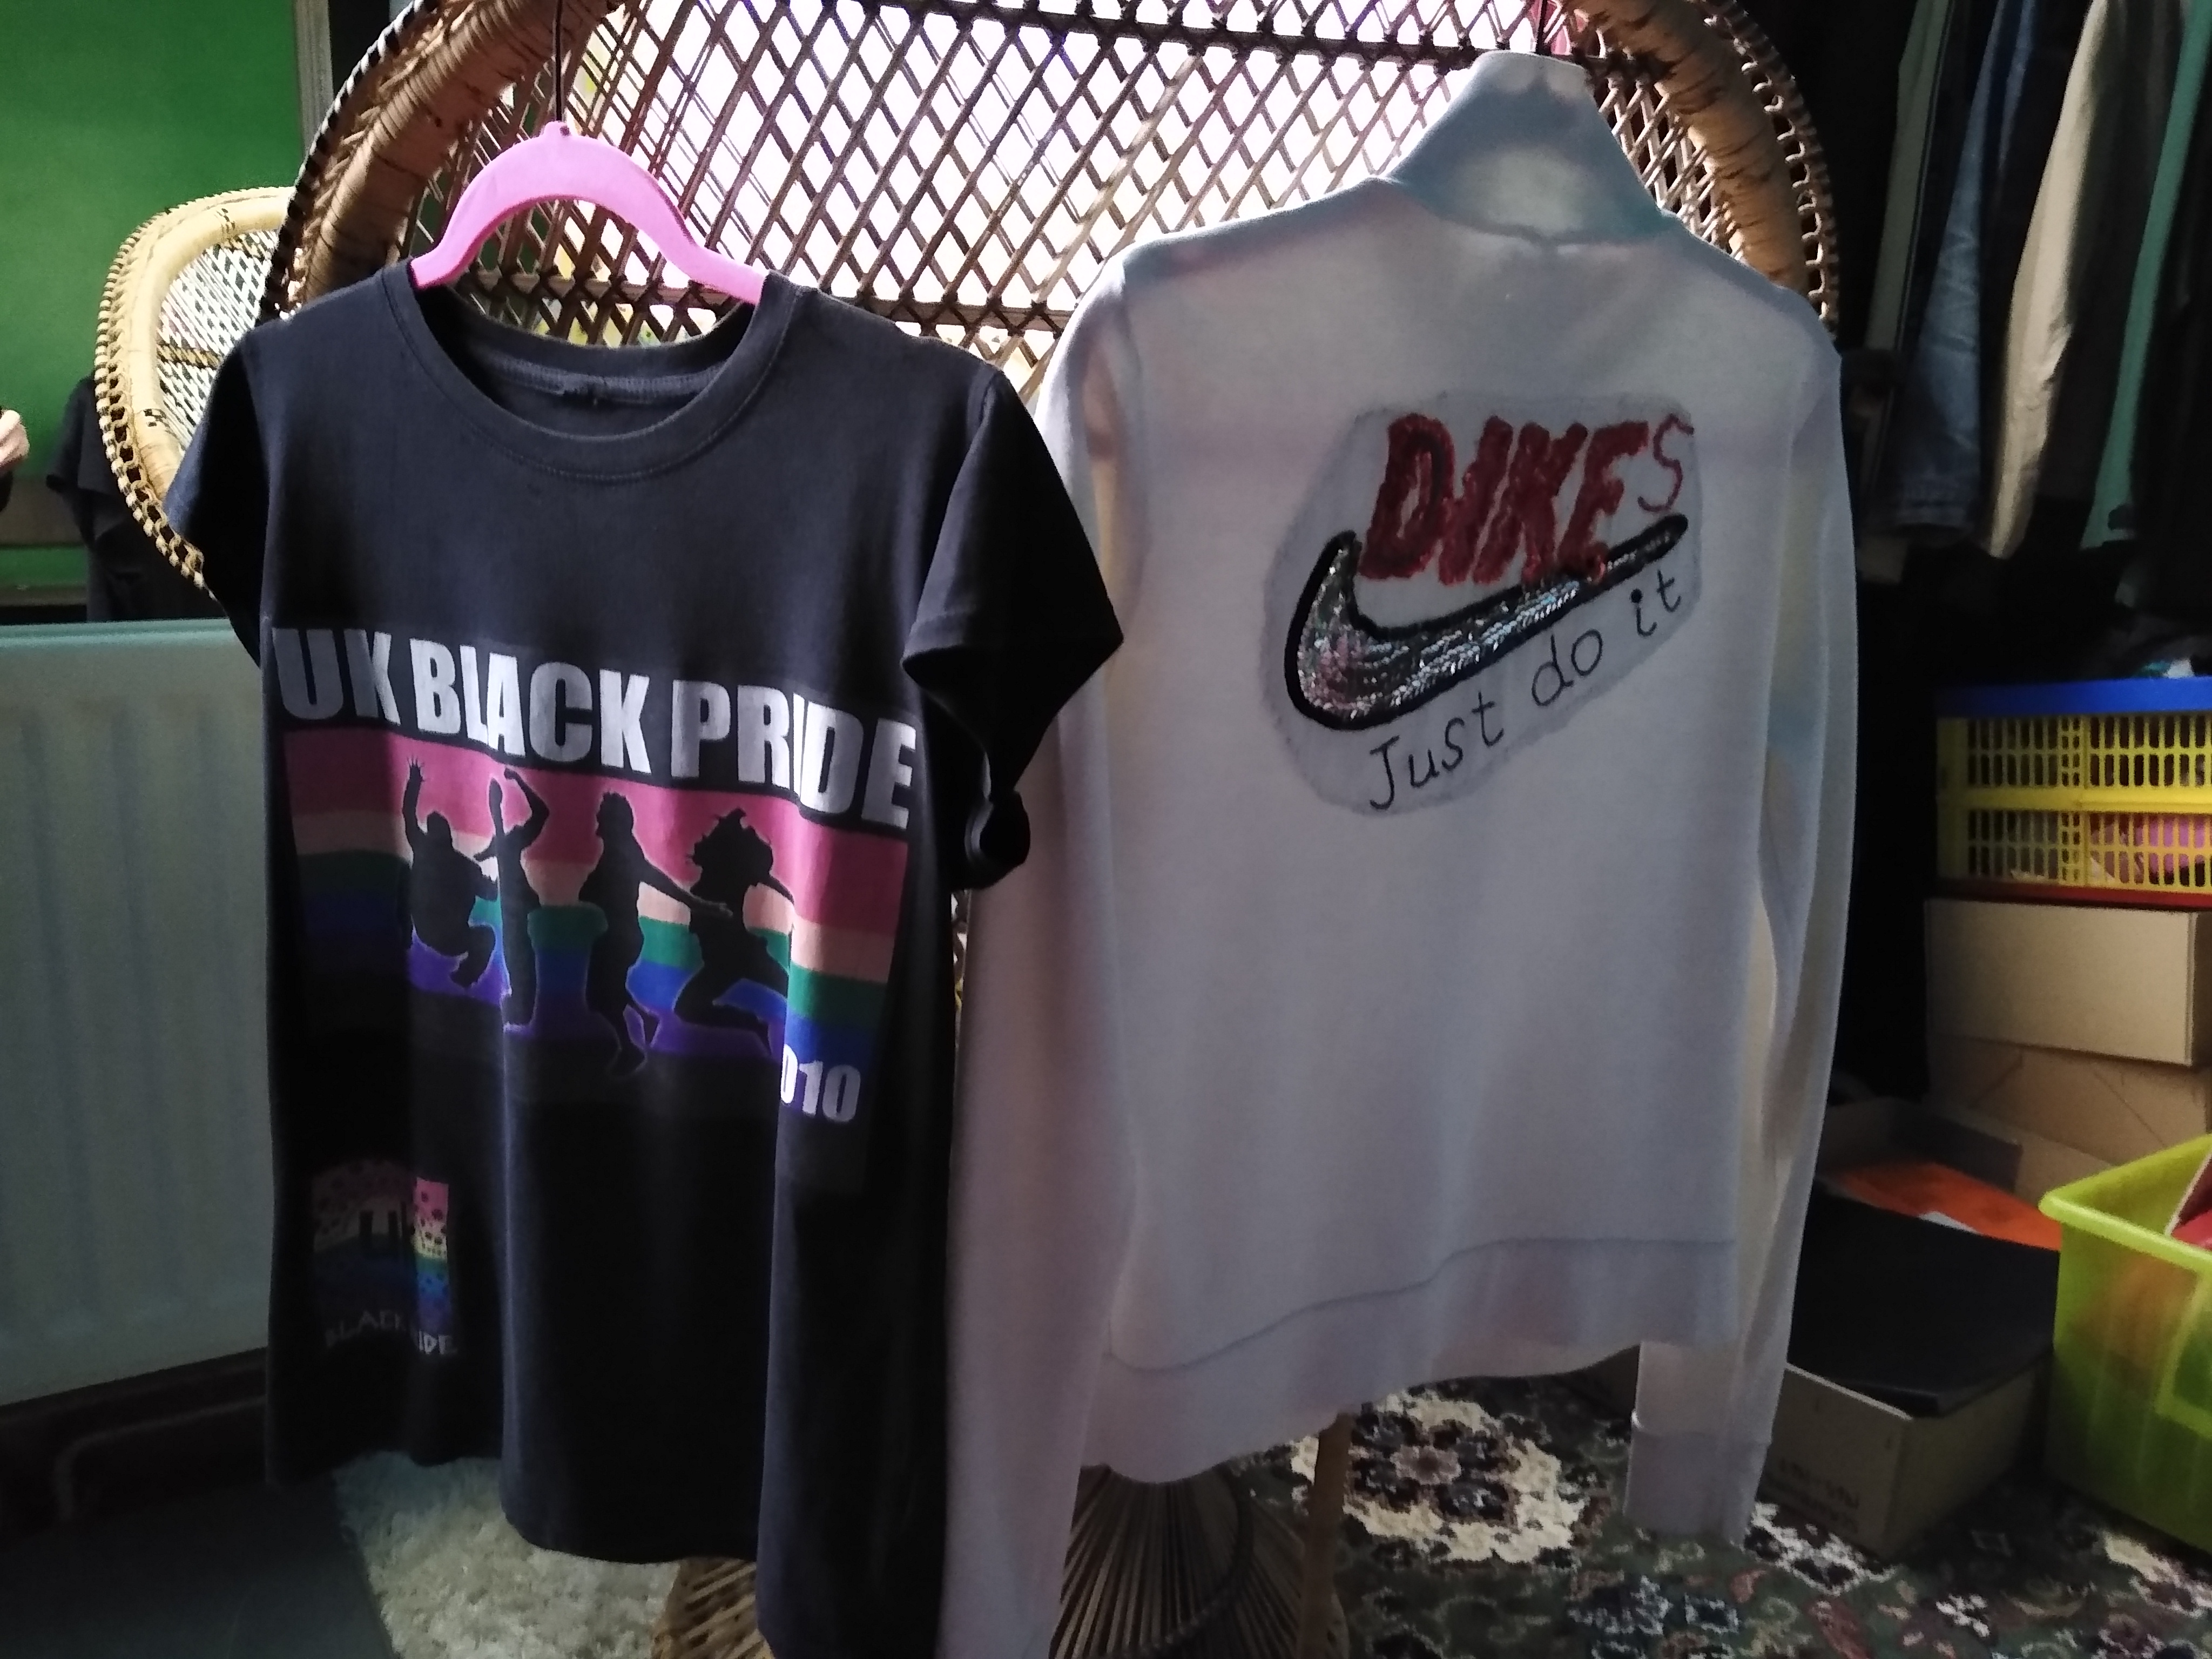 UK Black Pride T shirt and Dike Just do it jumper